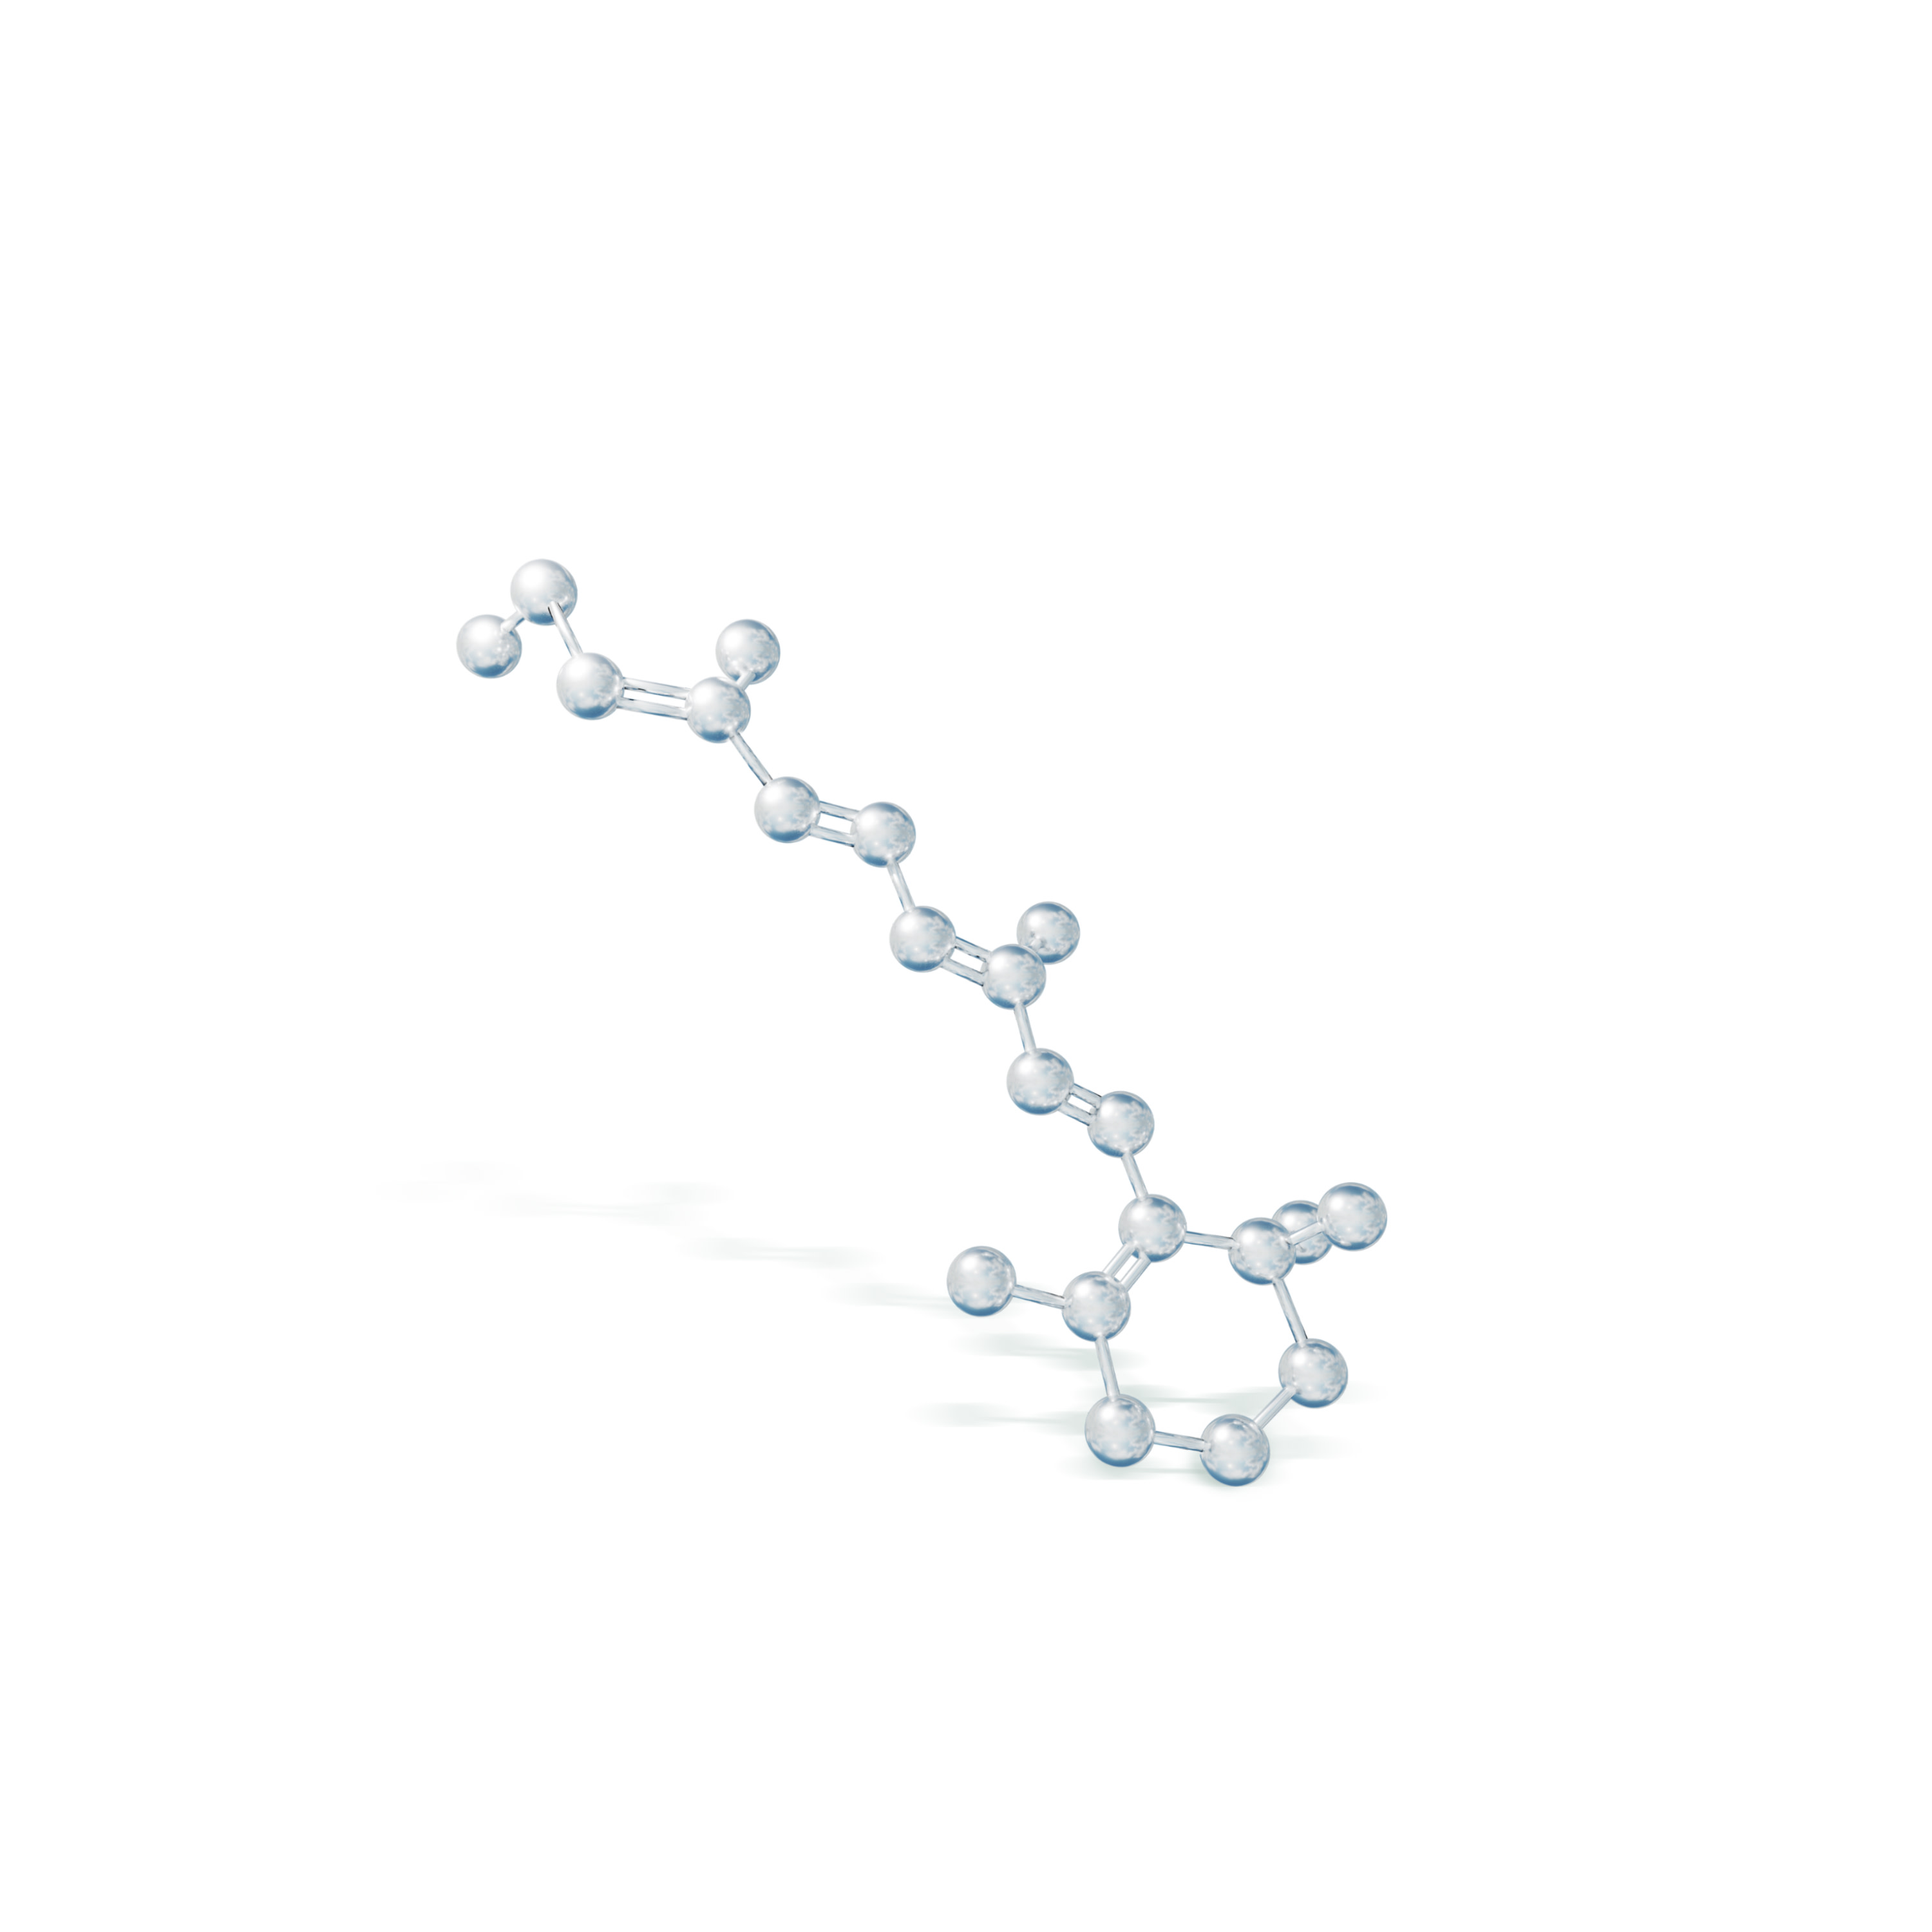 Glowing, pearly-white Retinol acid molecules.